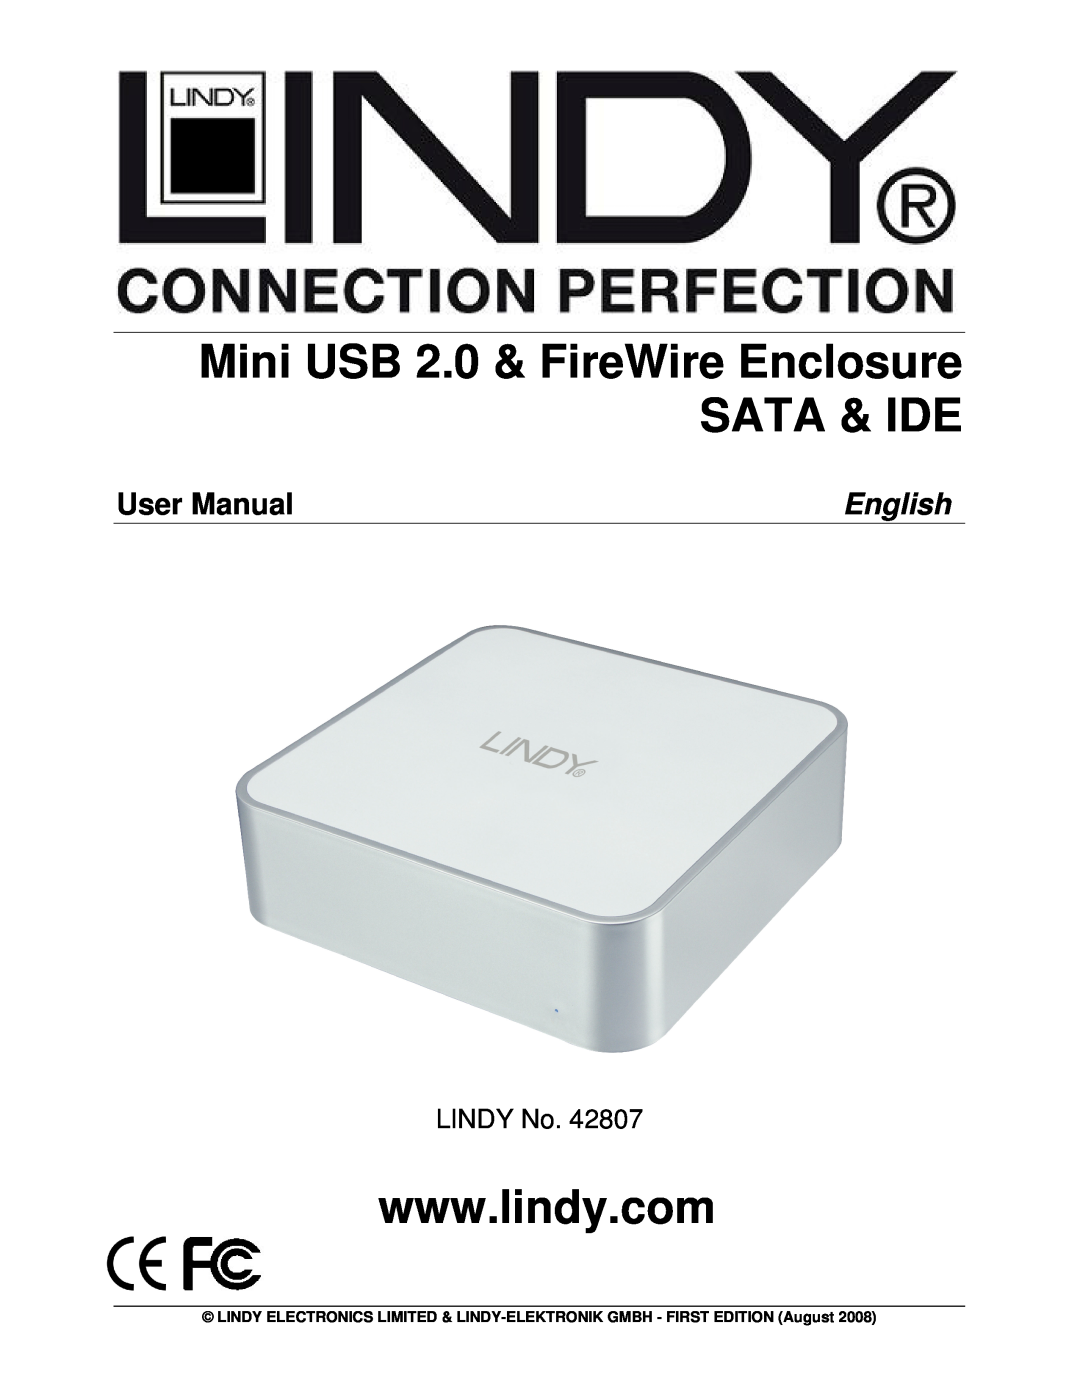 Lindy 42807v0 user manual Mini USB 2.0 & FireWire Enclosure SATA & IDE, User Manual, English, LINDY No 